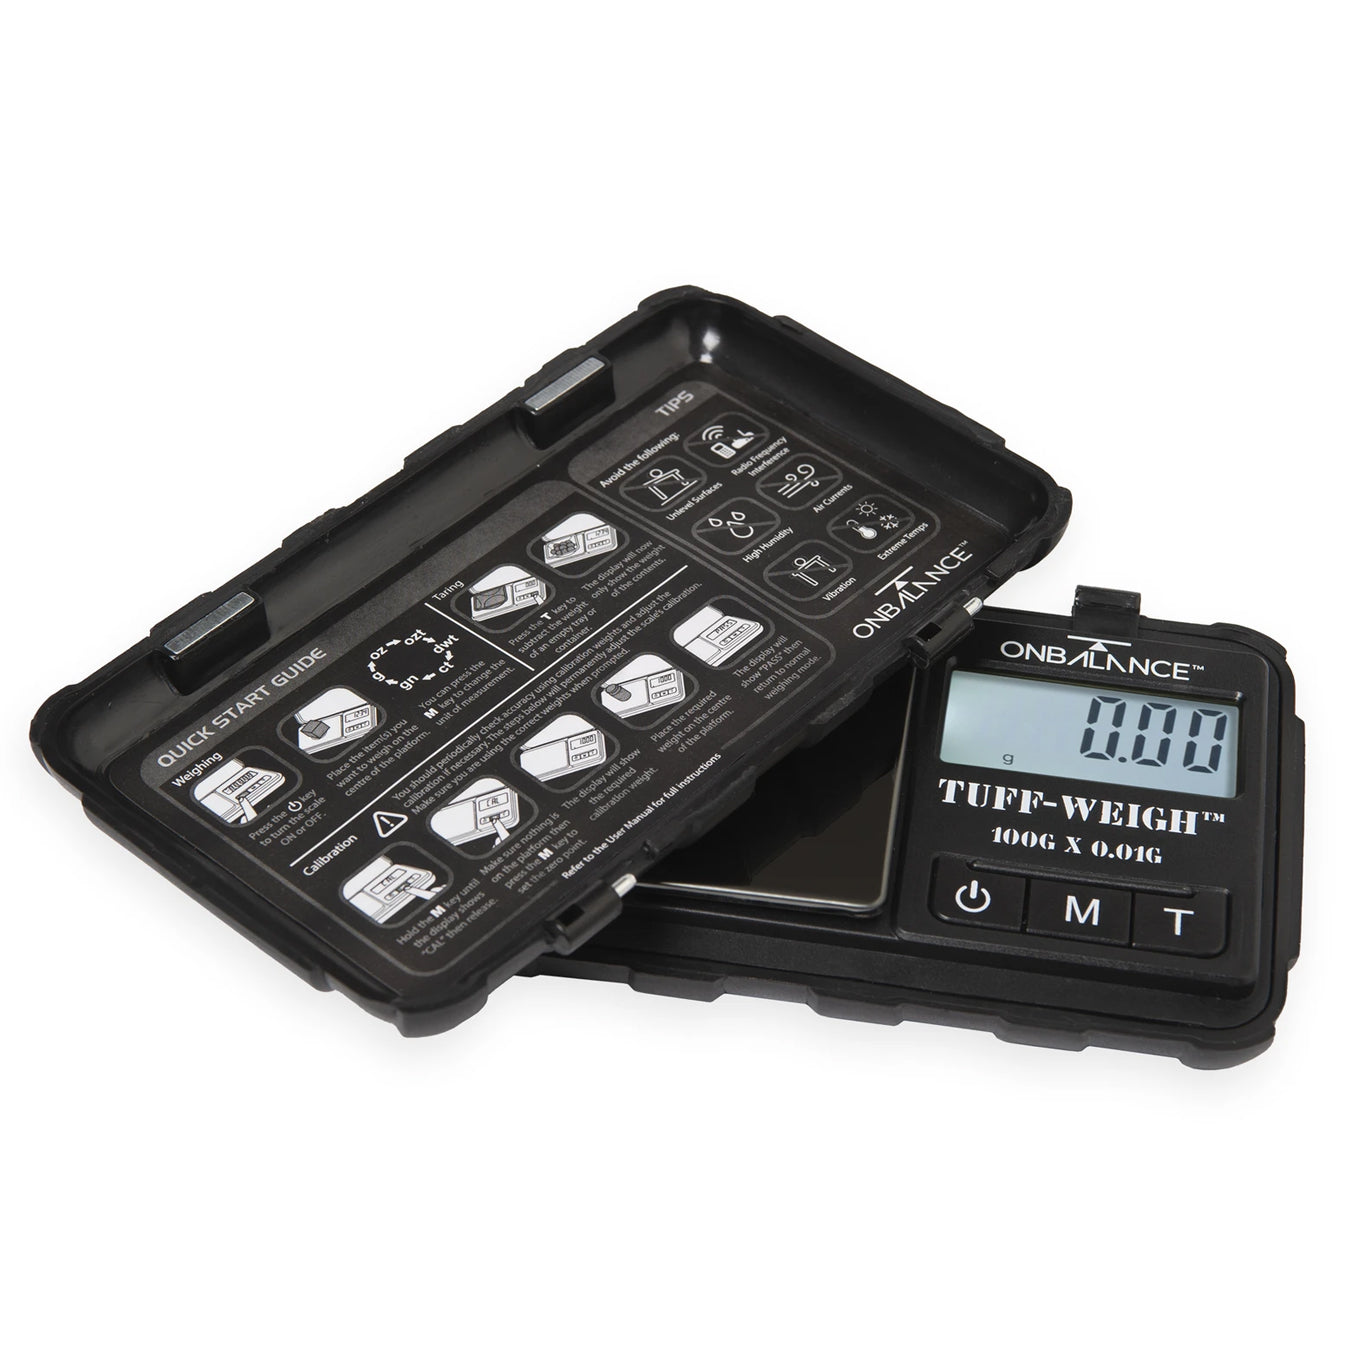 DZ3150g Digital Pocket Scale 150G X 0.01G